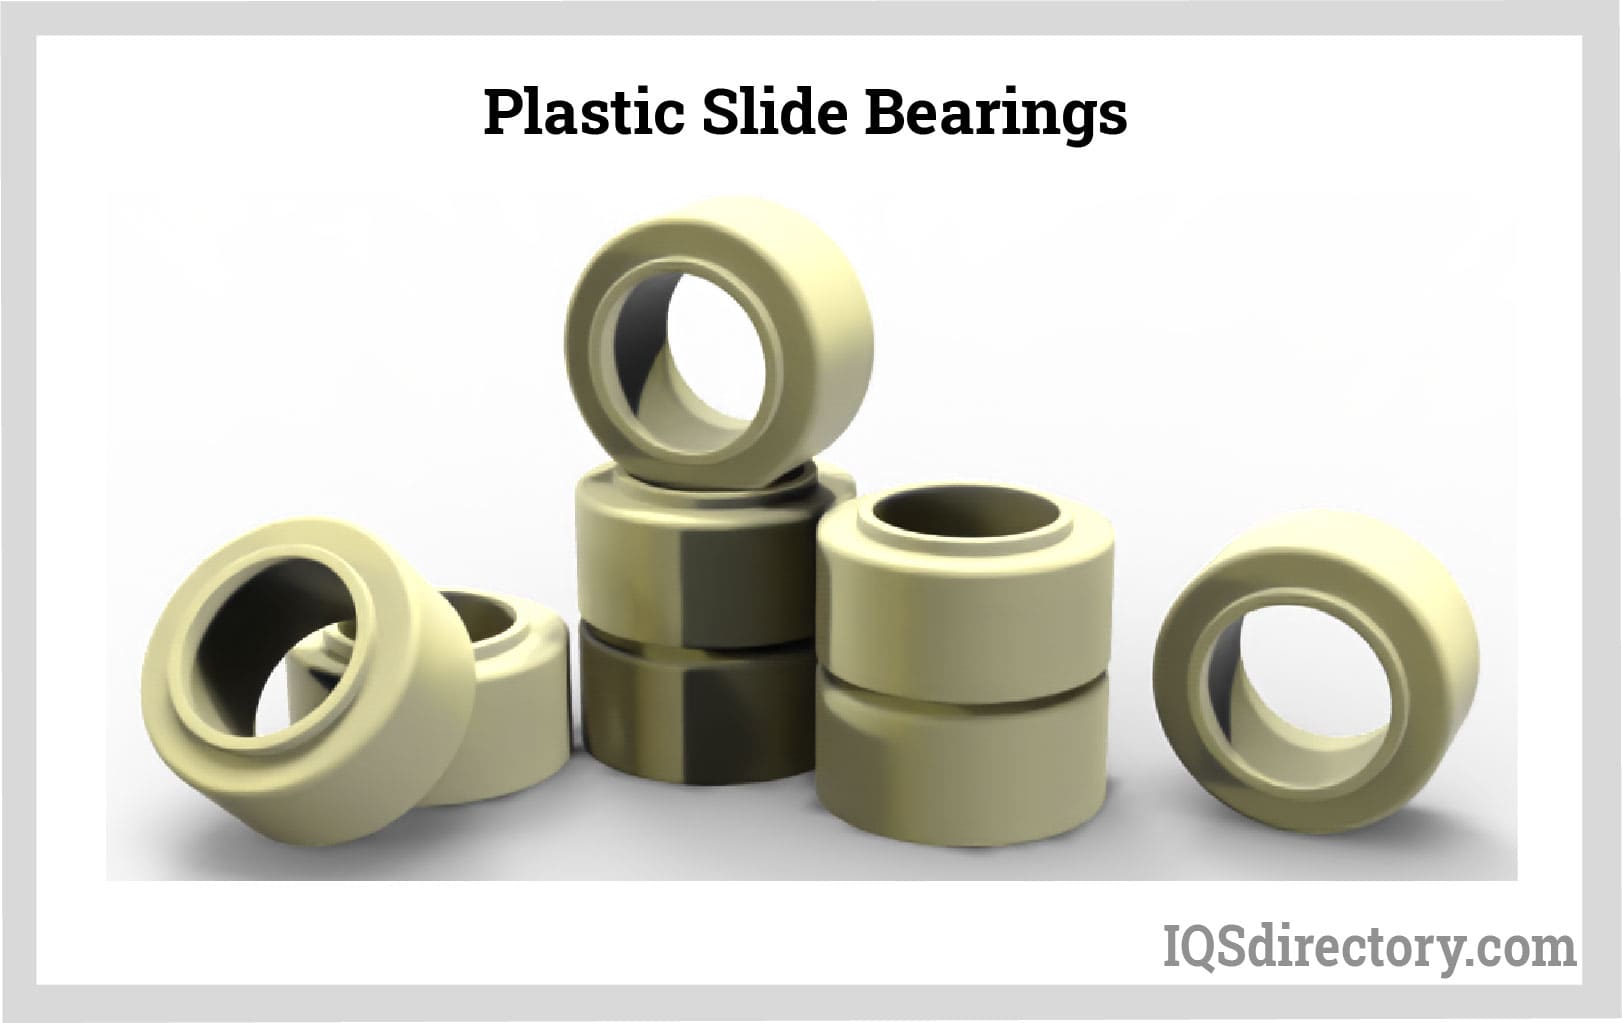 Plastic Slide Bearings